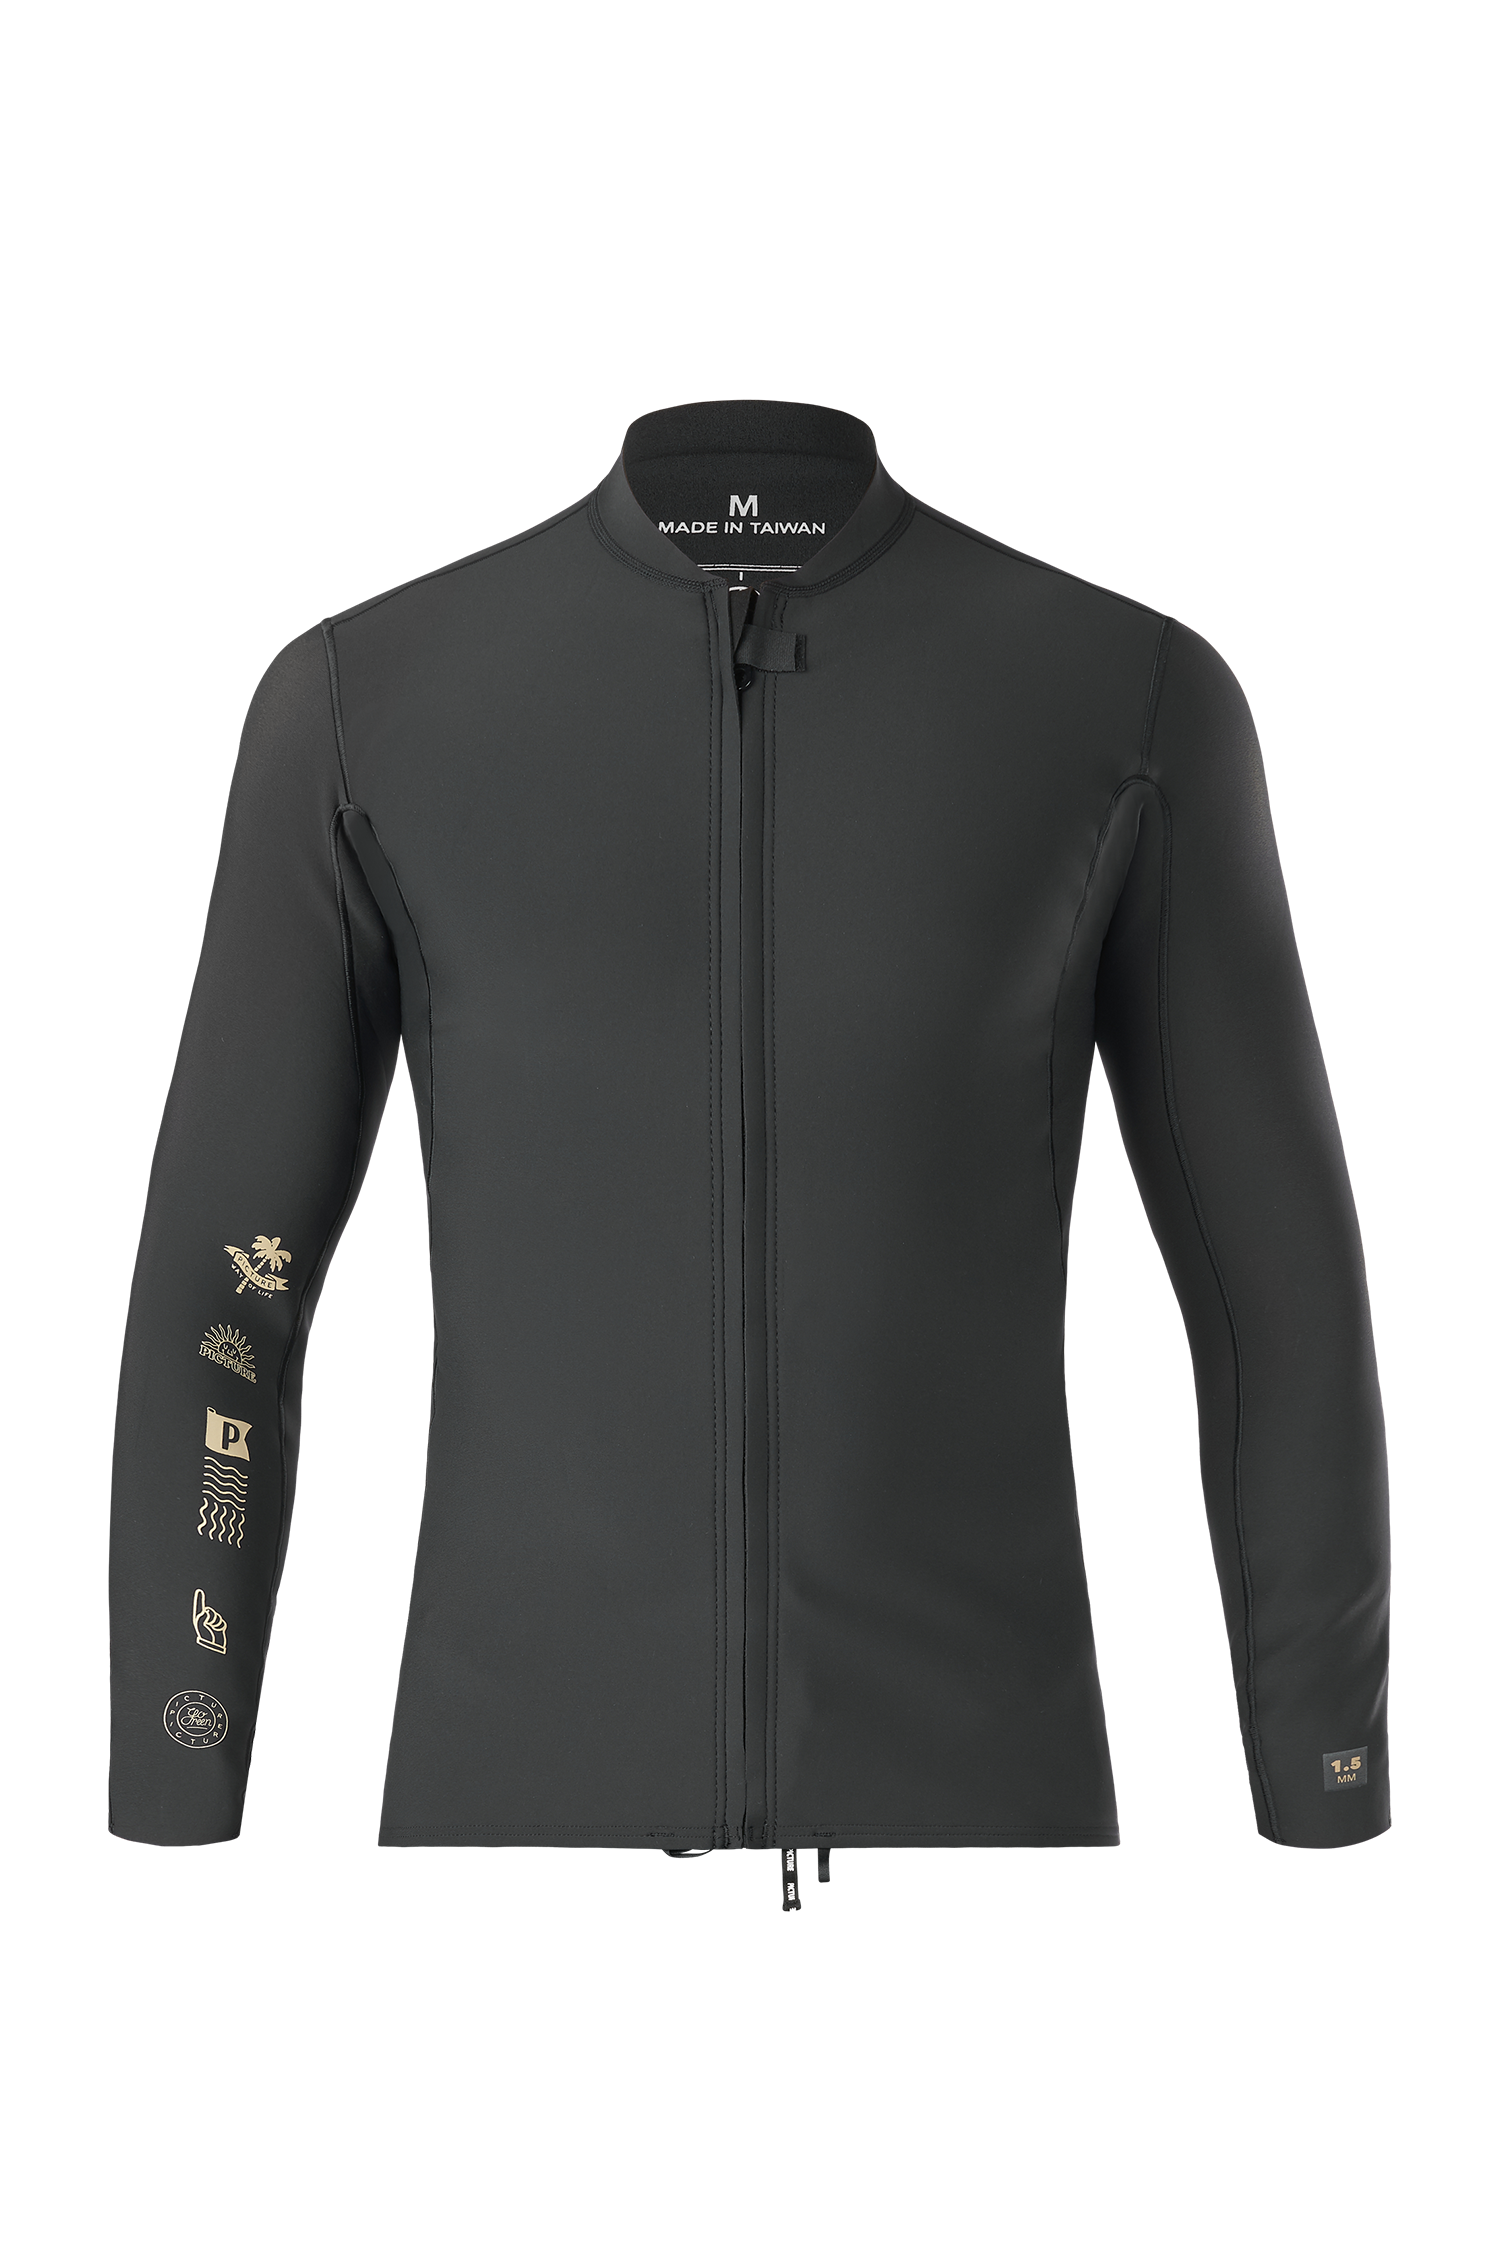 Picture Men's Will Front Zip 1.5 ML Wetsuit Jacket  BLACK W/Sleeve Prints